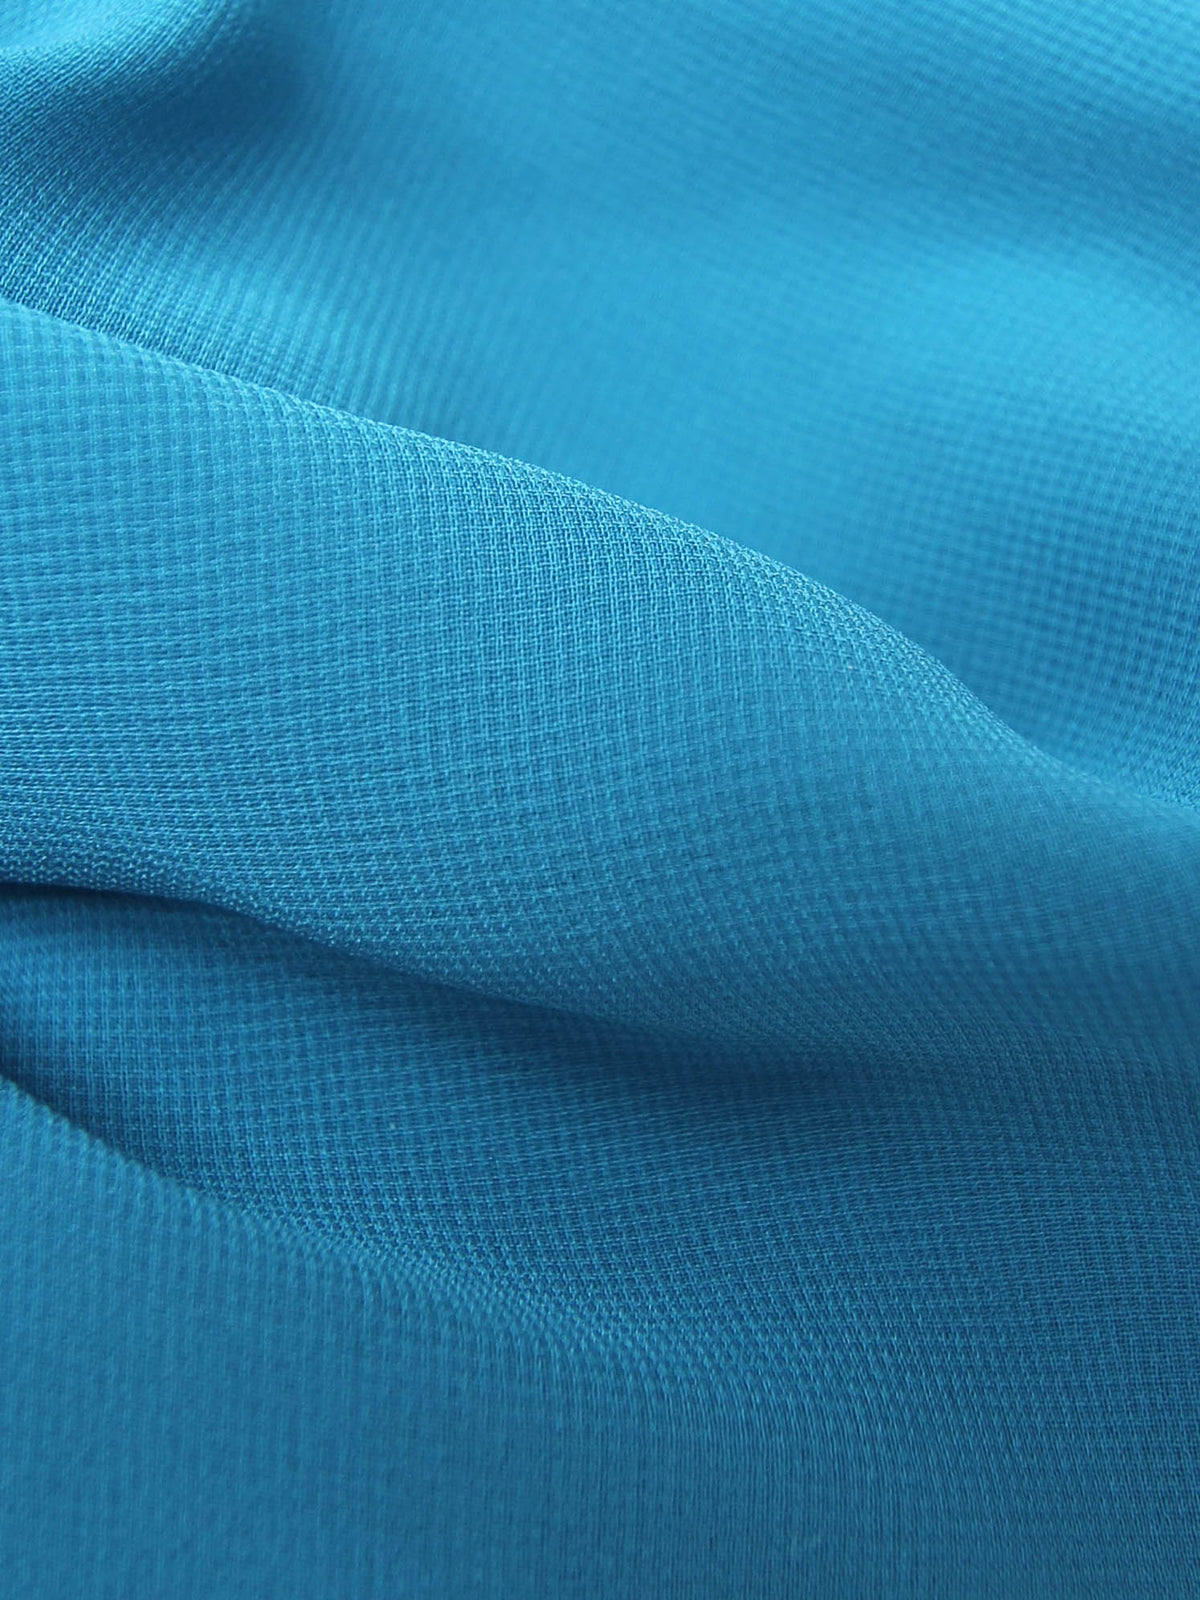 Teal Polyester Chiffon Fabric - Serendipity